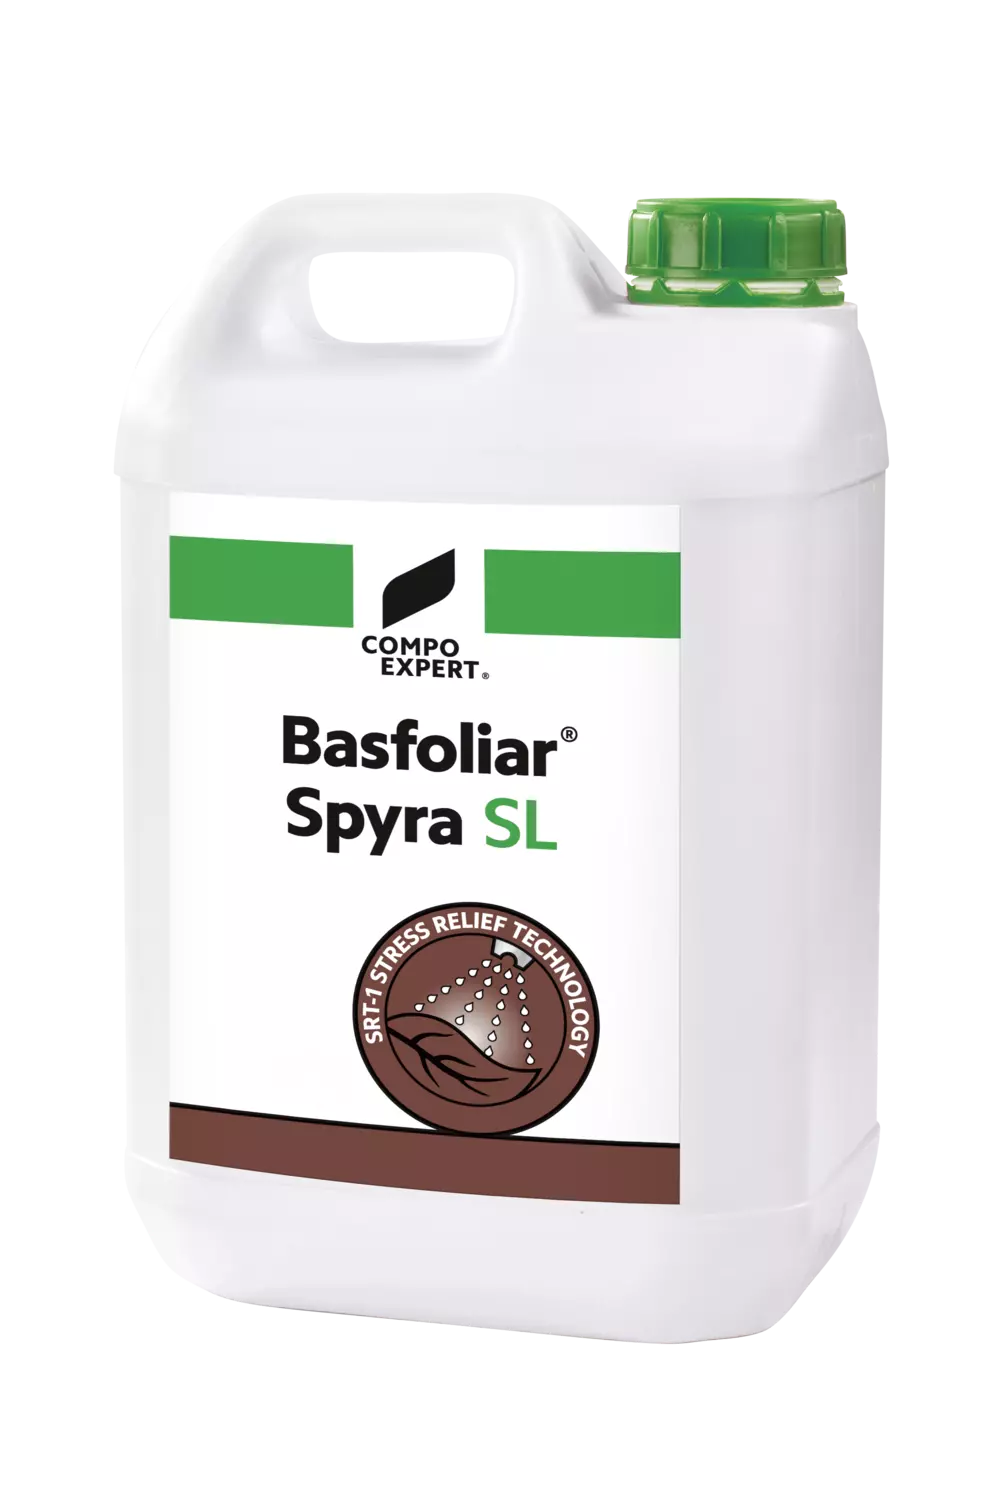 Basfoliar Spyra Italy